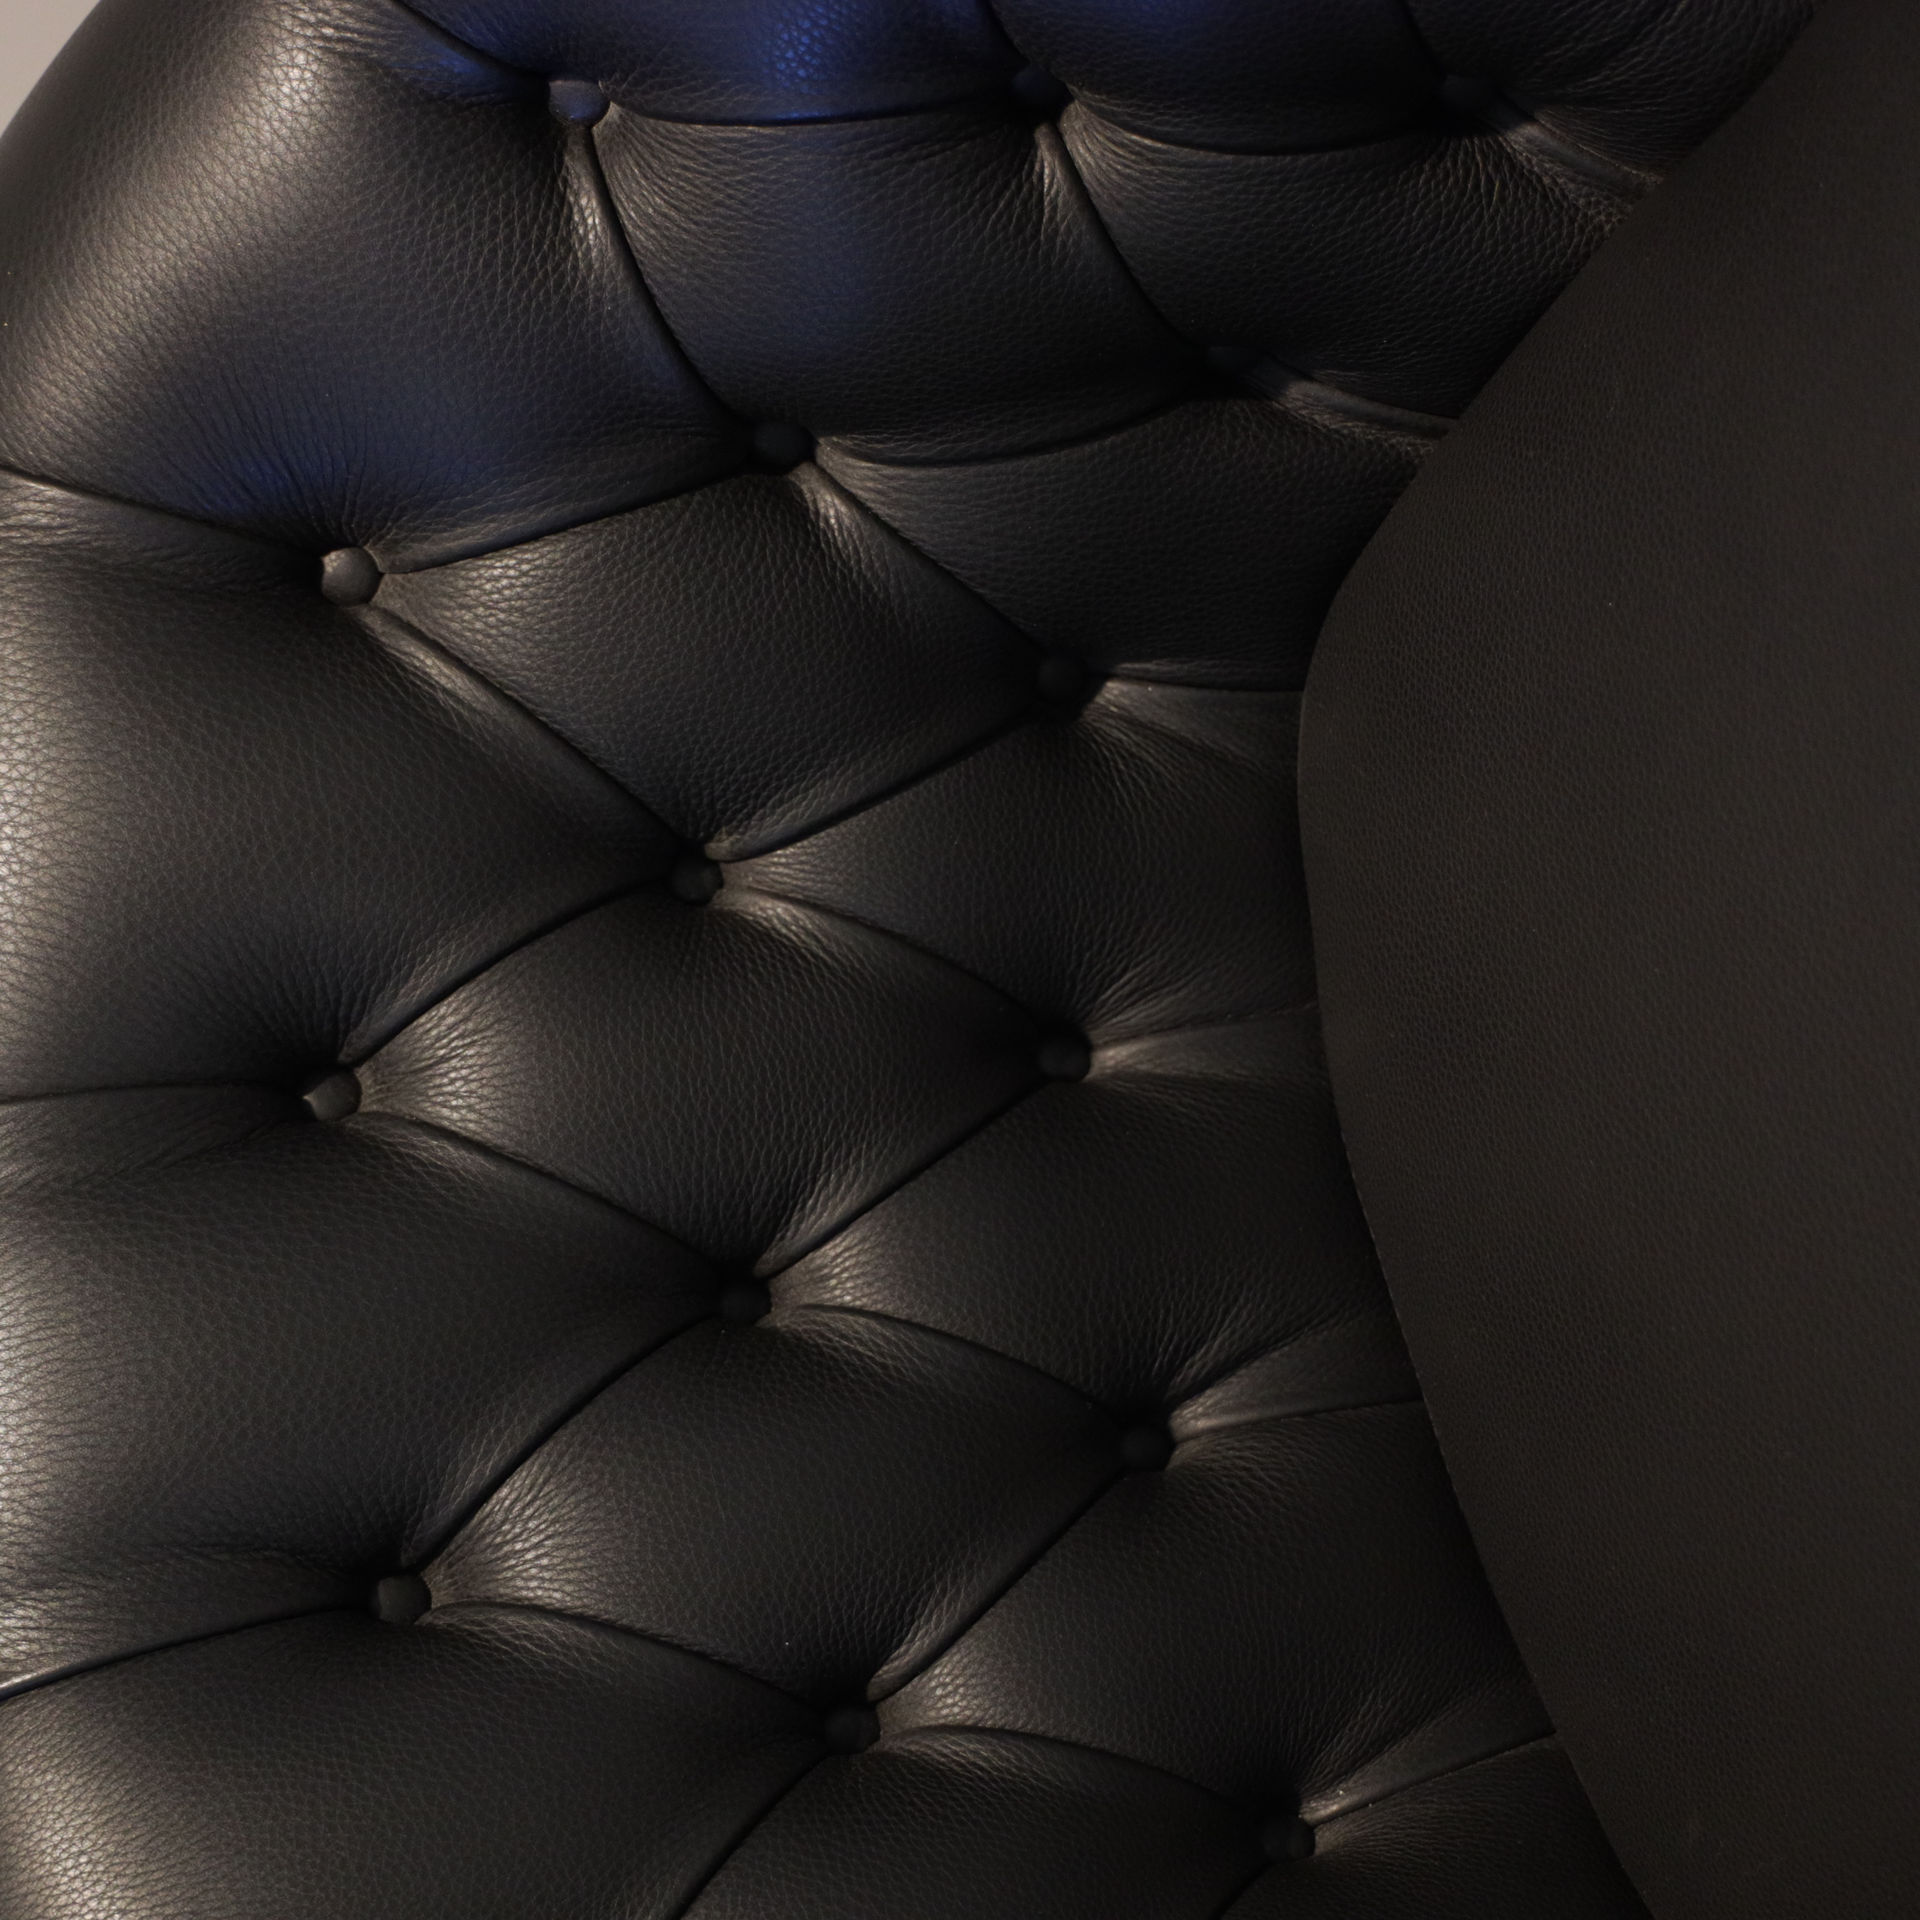 Italiaans Design fauteuil - Materiaal